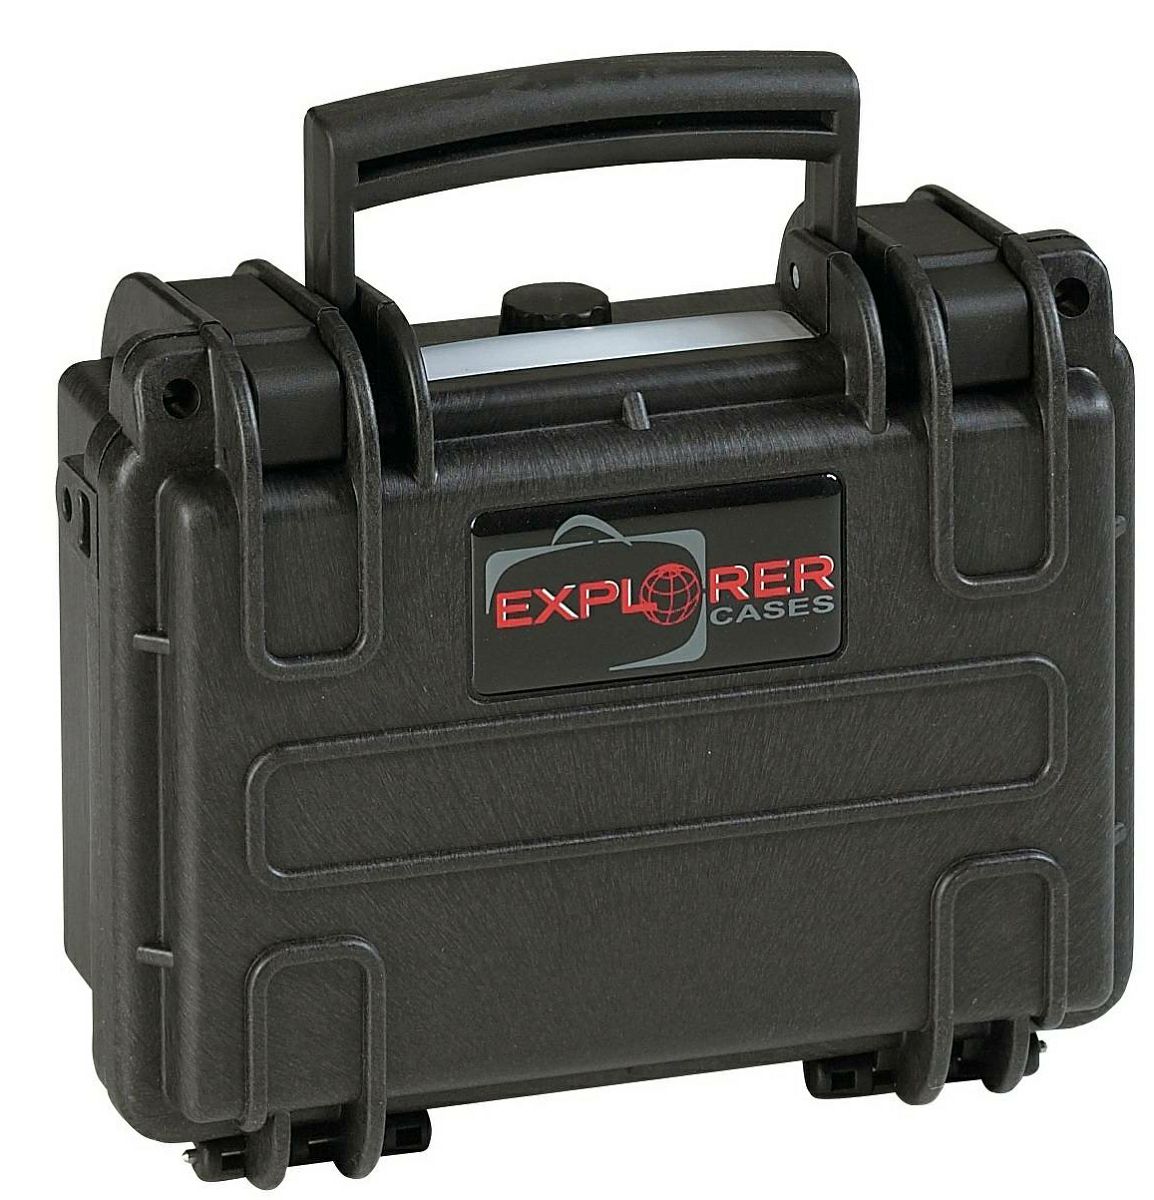 Explorer Cases 1908 Black 216x180x102mm kufer za foto opremu kofer Camera Case